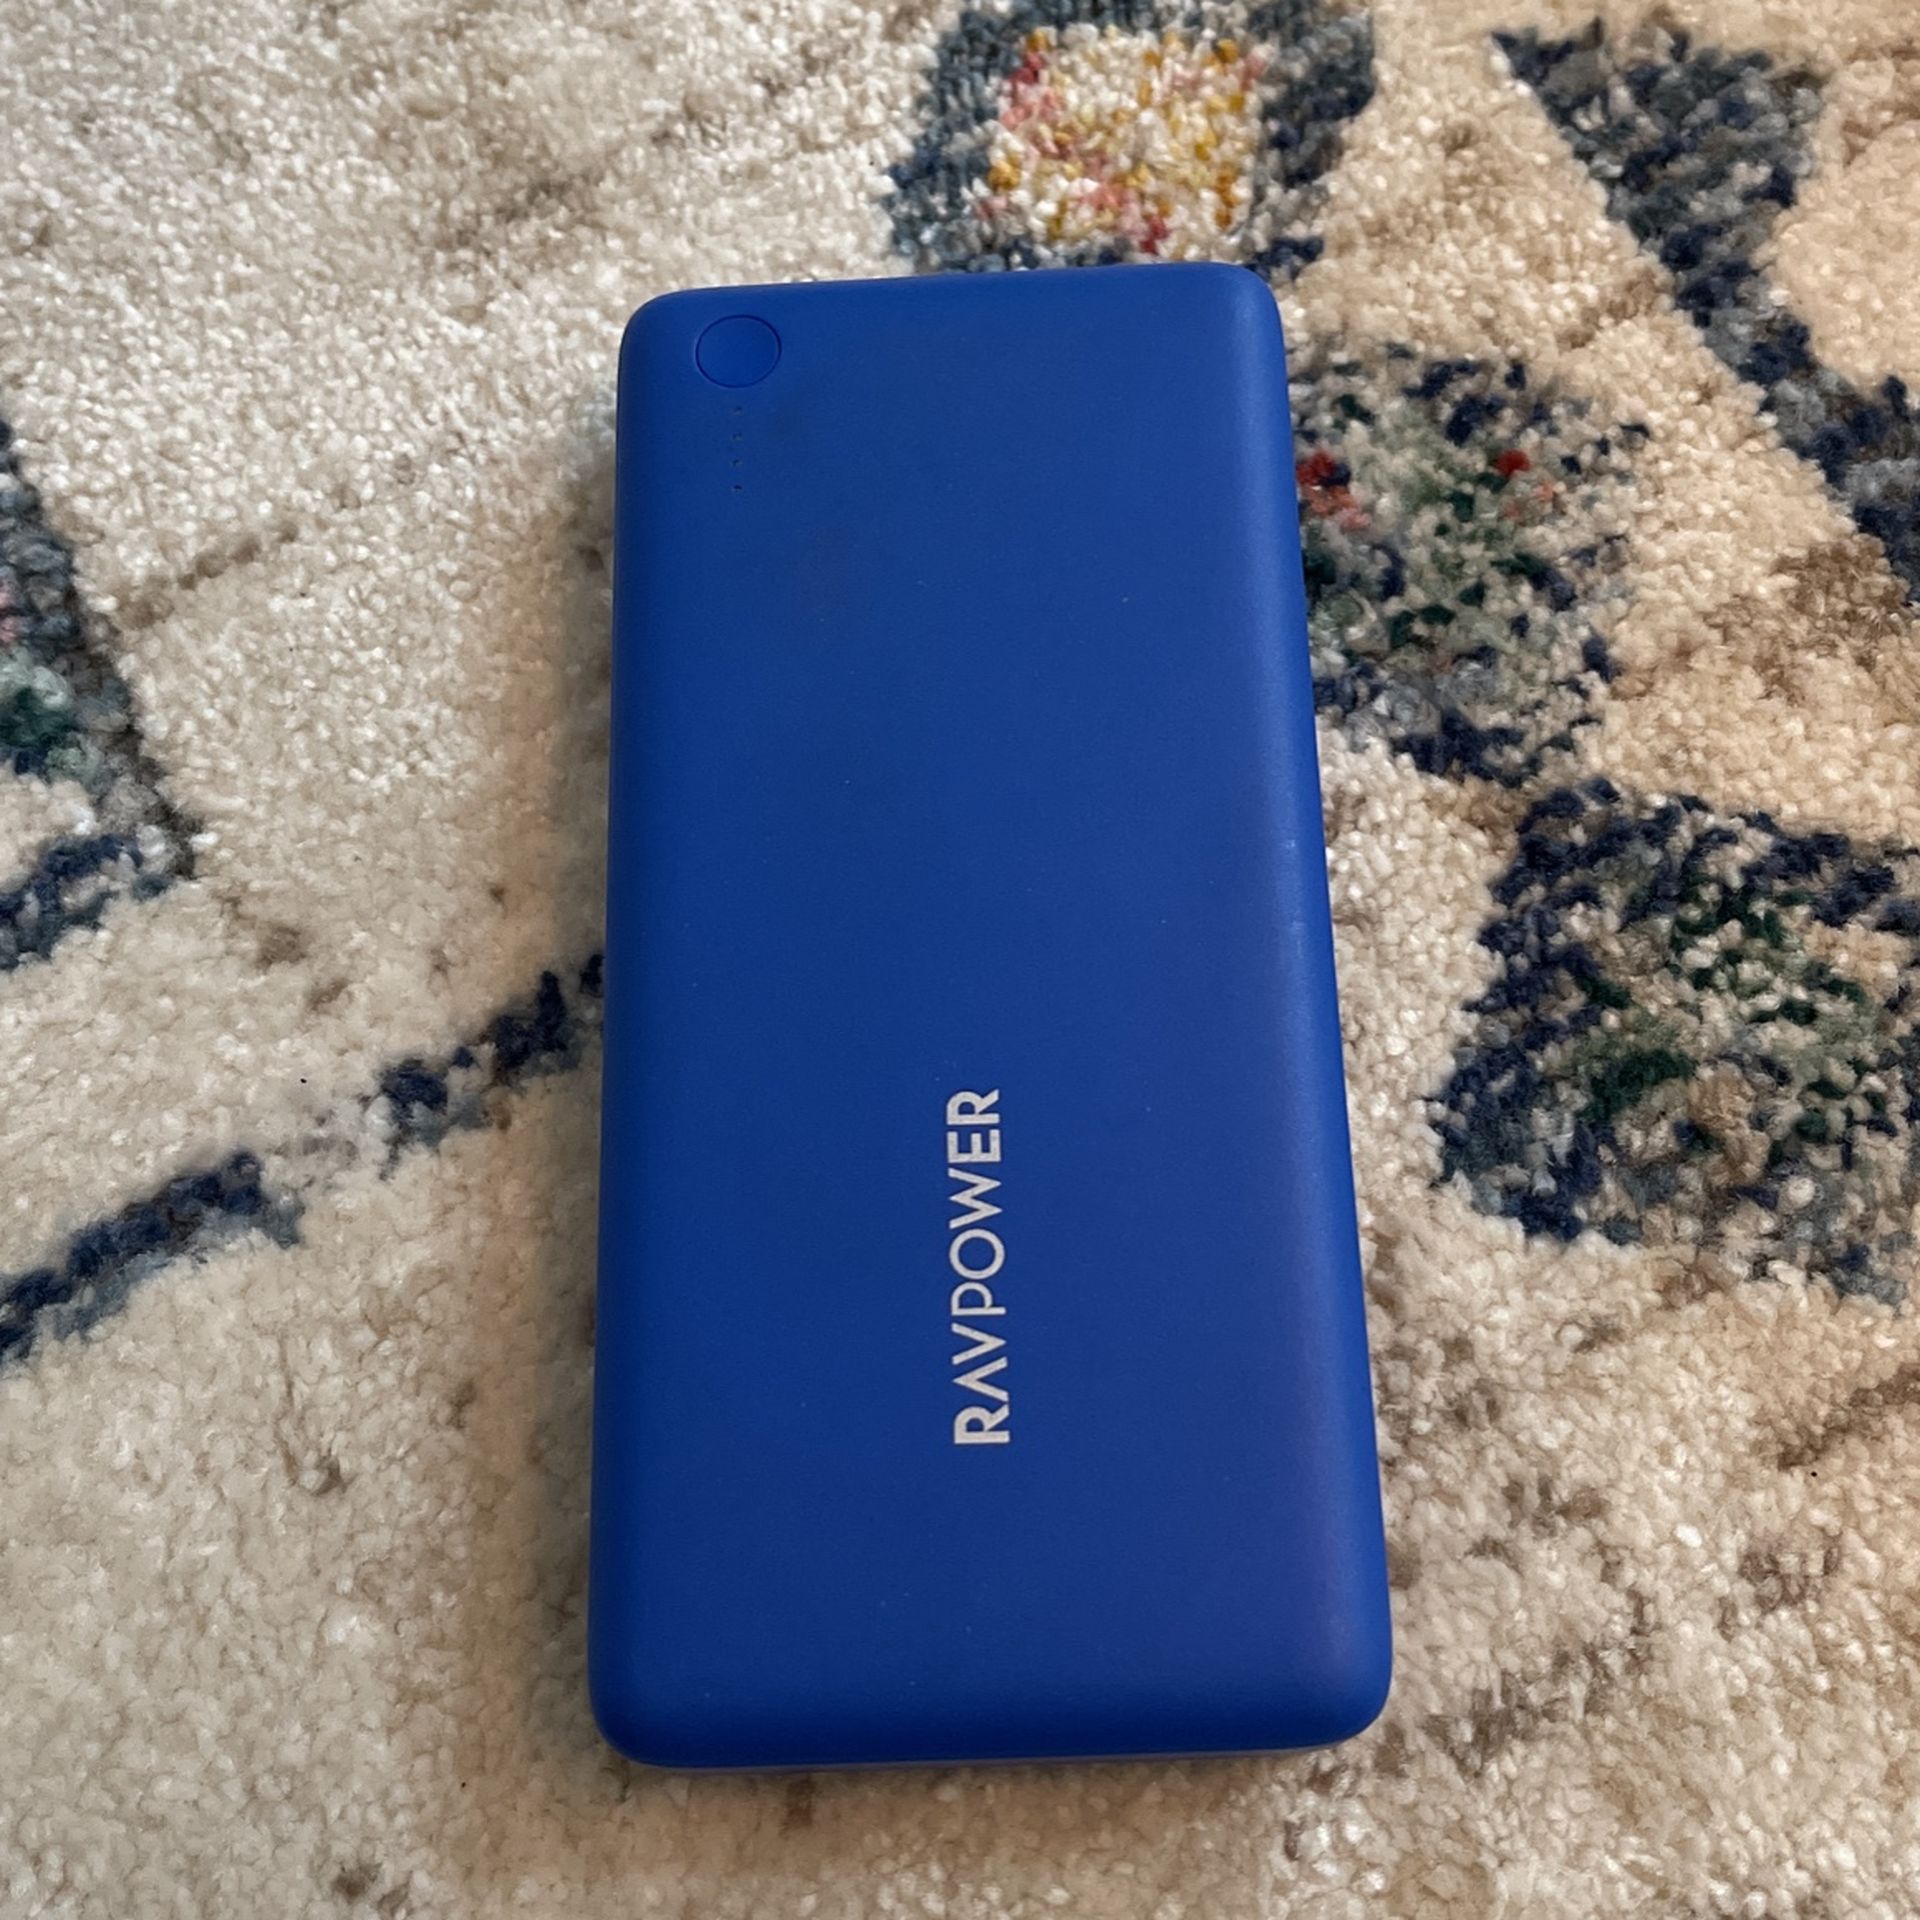 RAVPower 26800mAh 3-Port power bank Portable Charger Battery Pack-blue